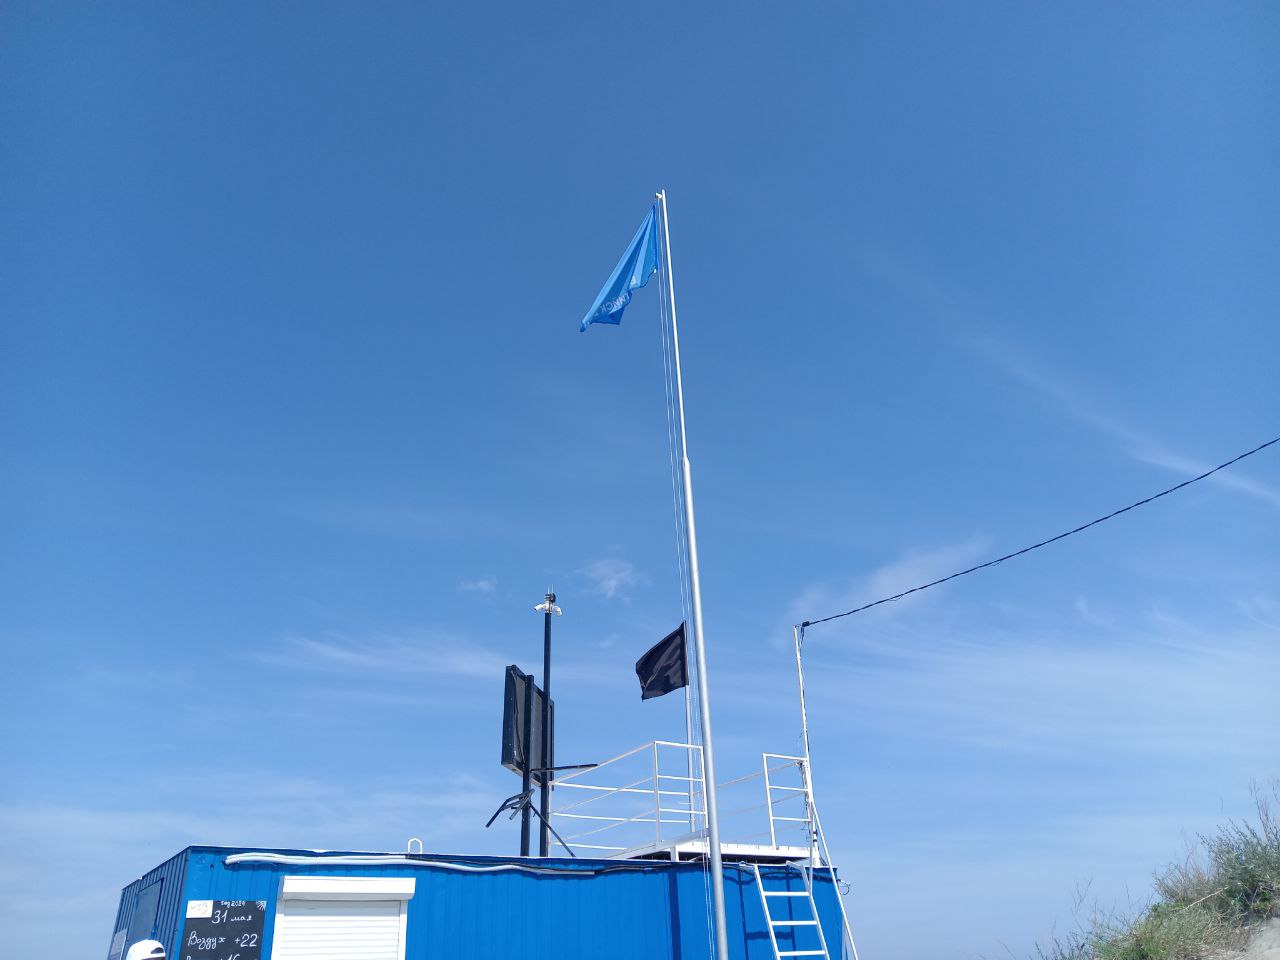  На пляже в Балтийске подняли синий флаг 